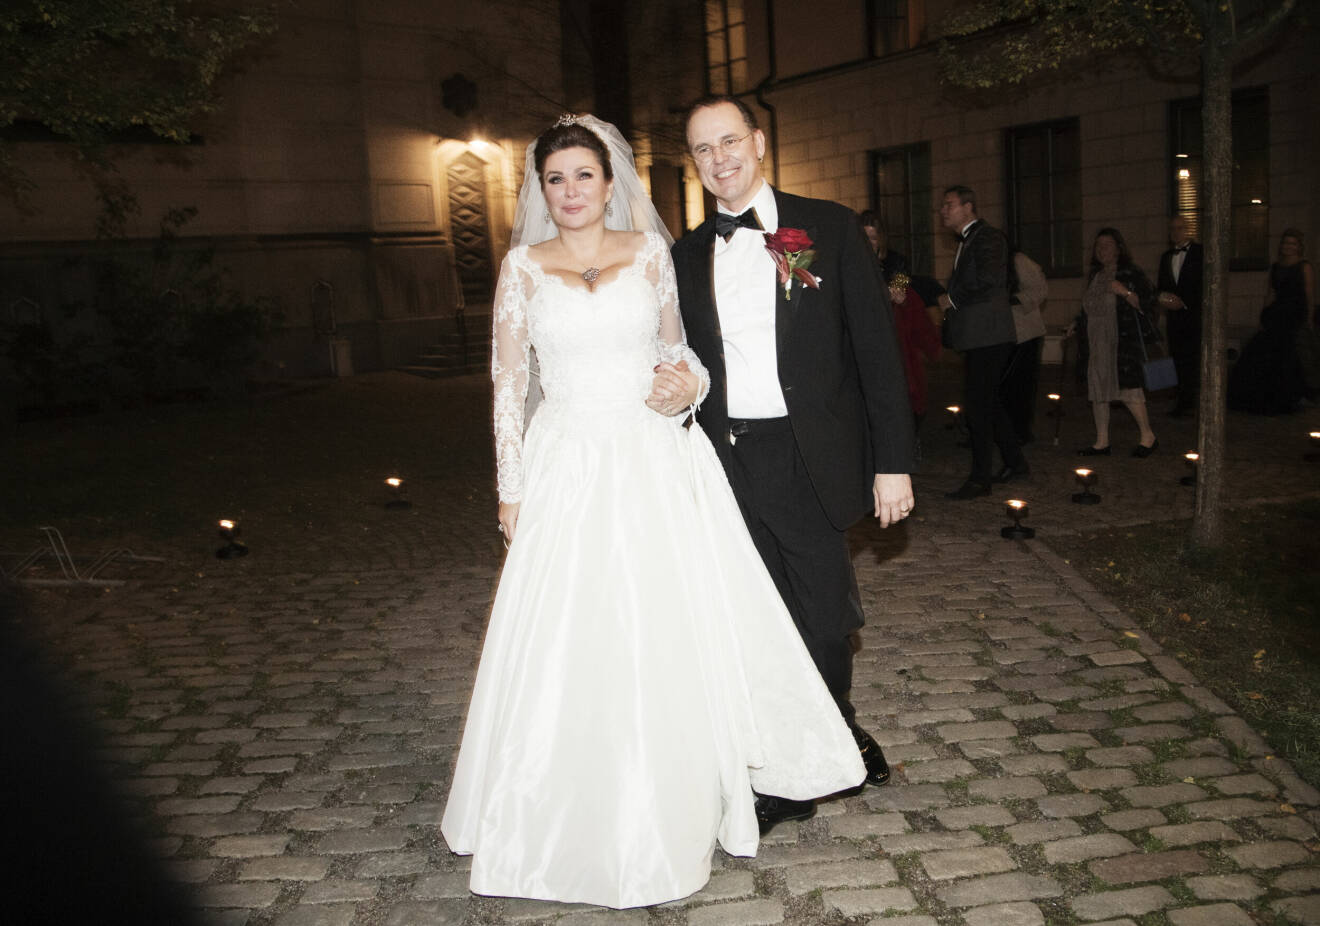 Dominika Peczynski och Anders Borg bröllop bilder